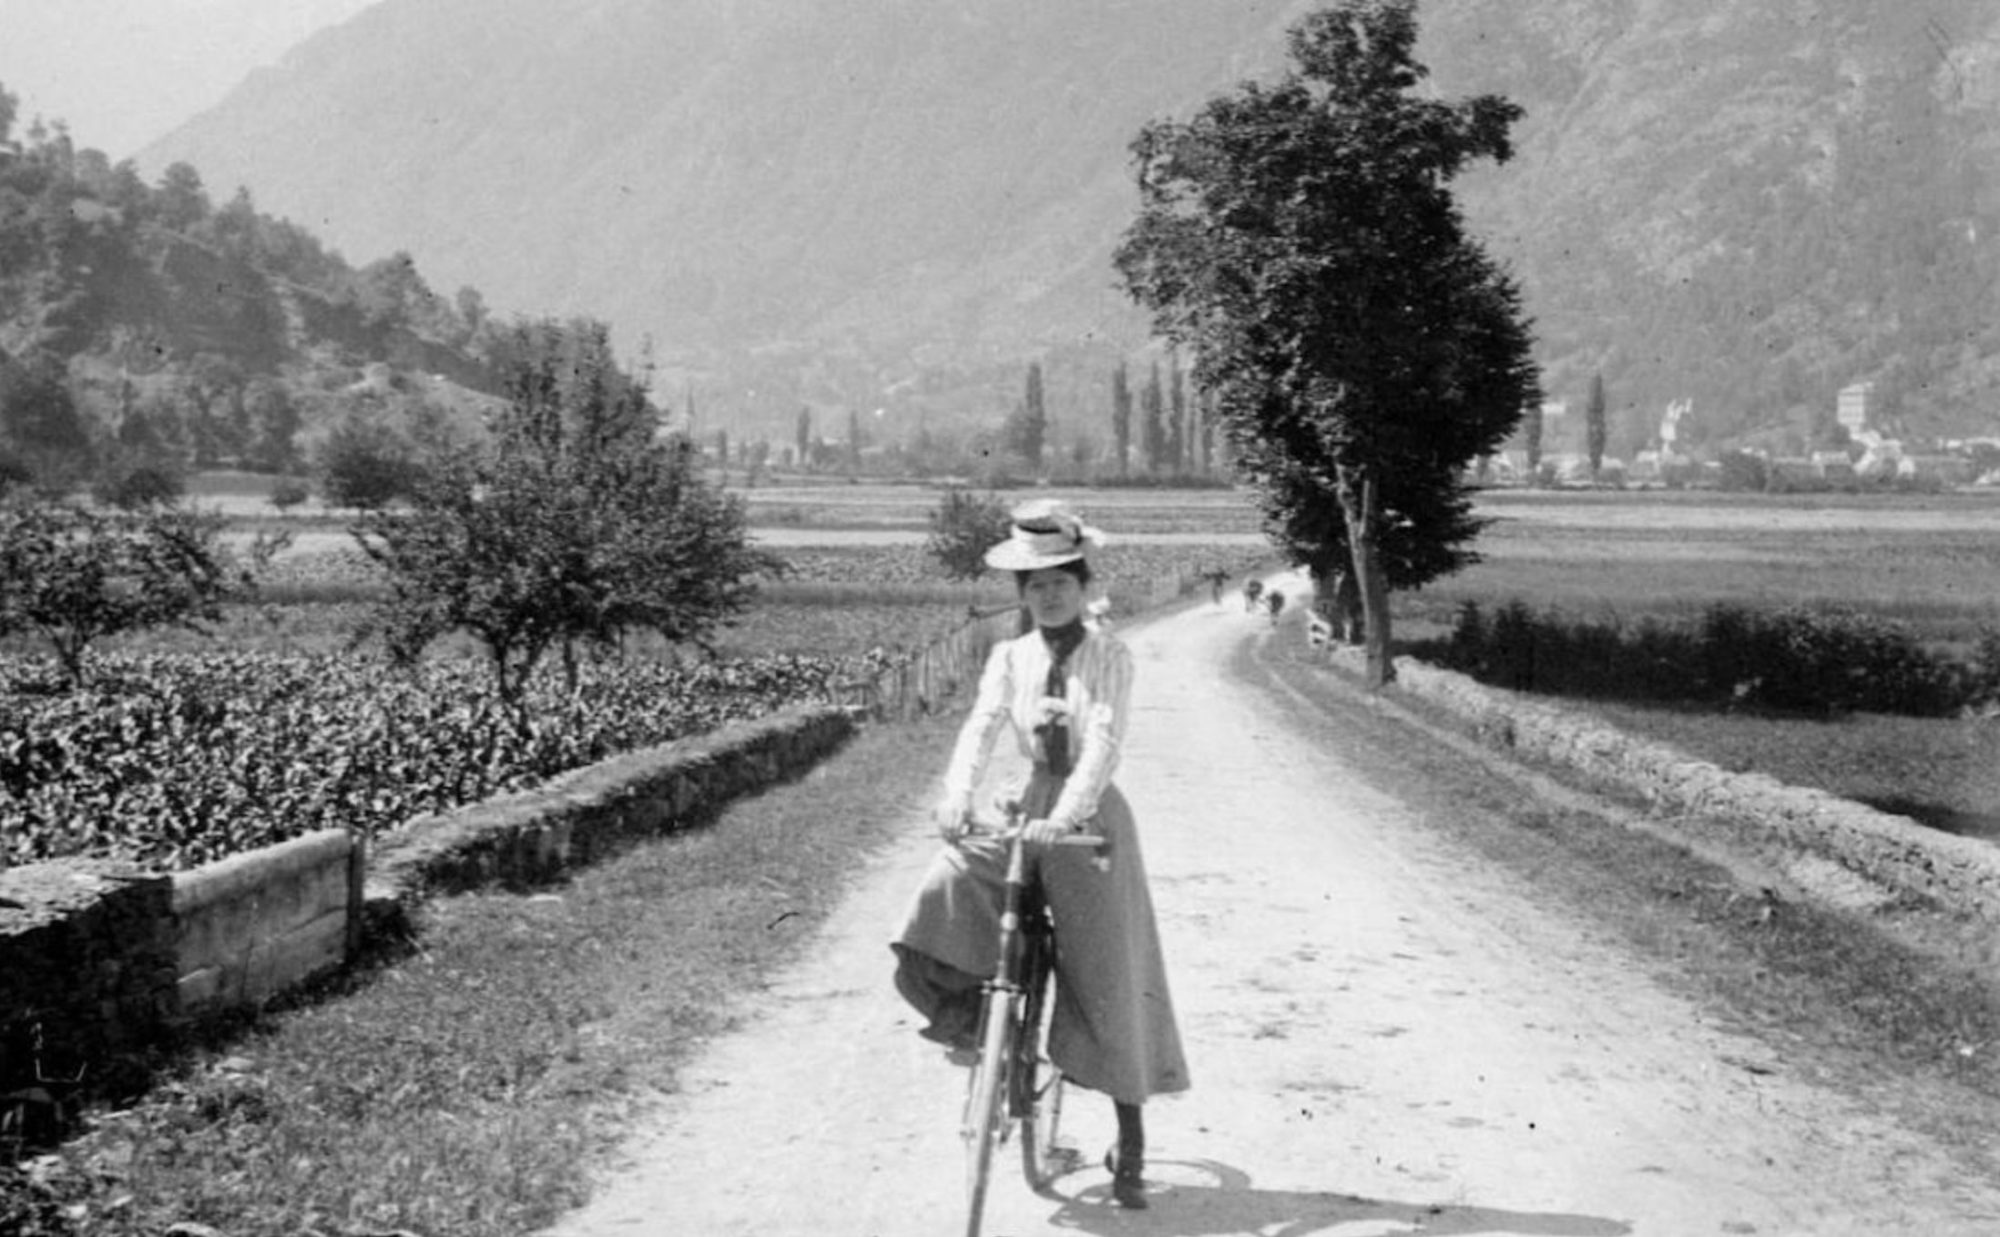 Annie Londonderry, Rad Women of Bikepacking